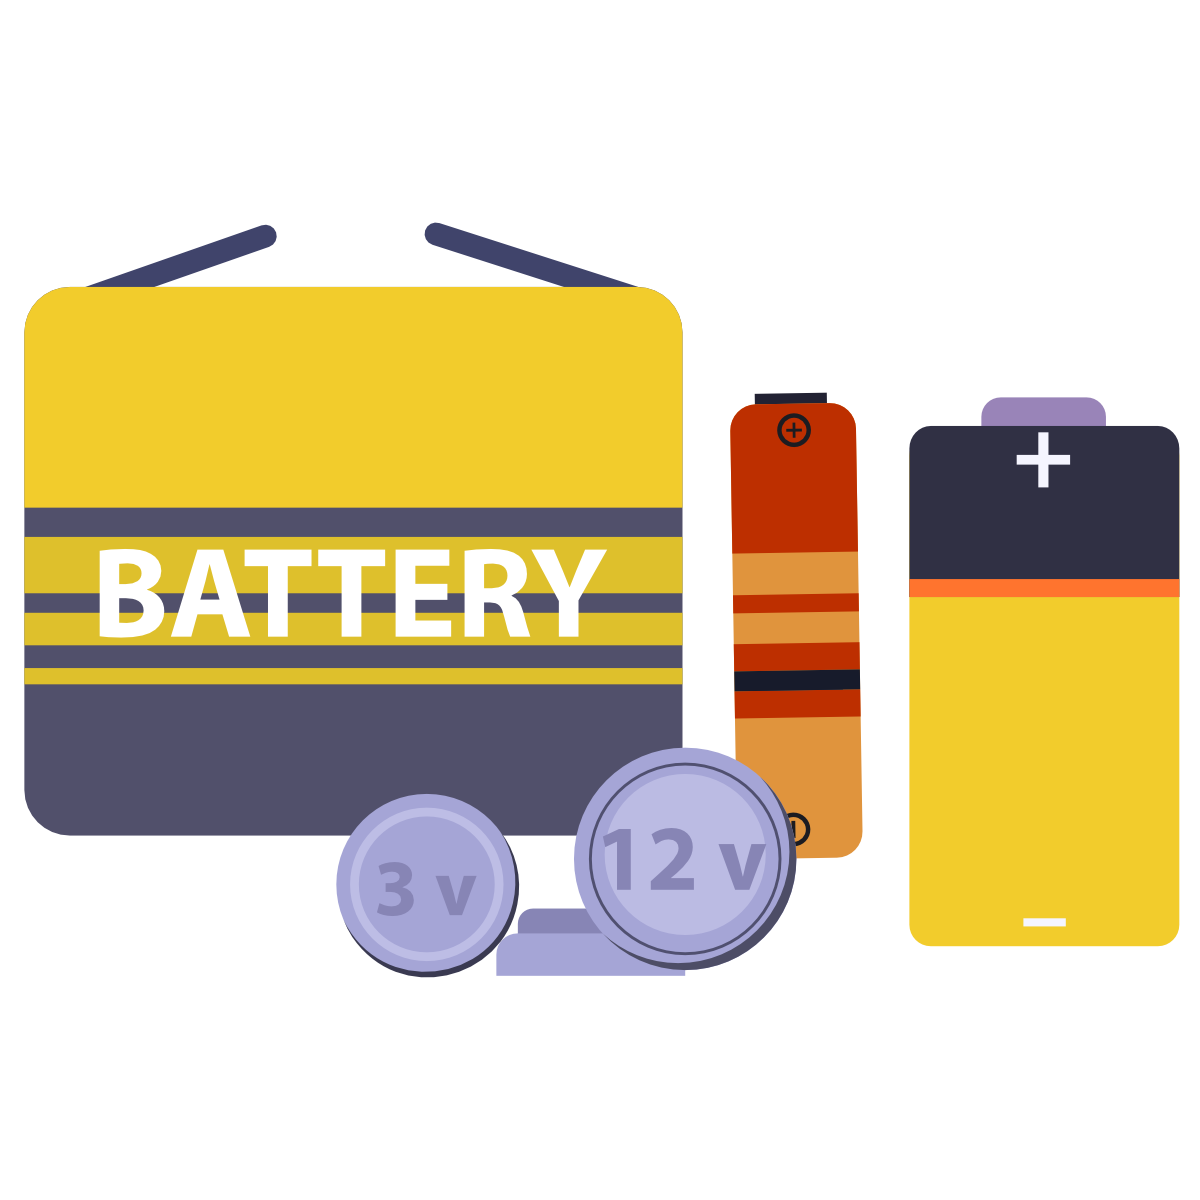 Geraetebatterien